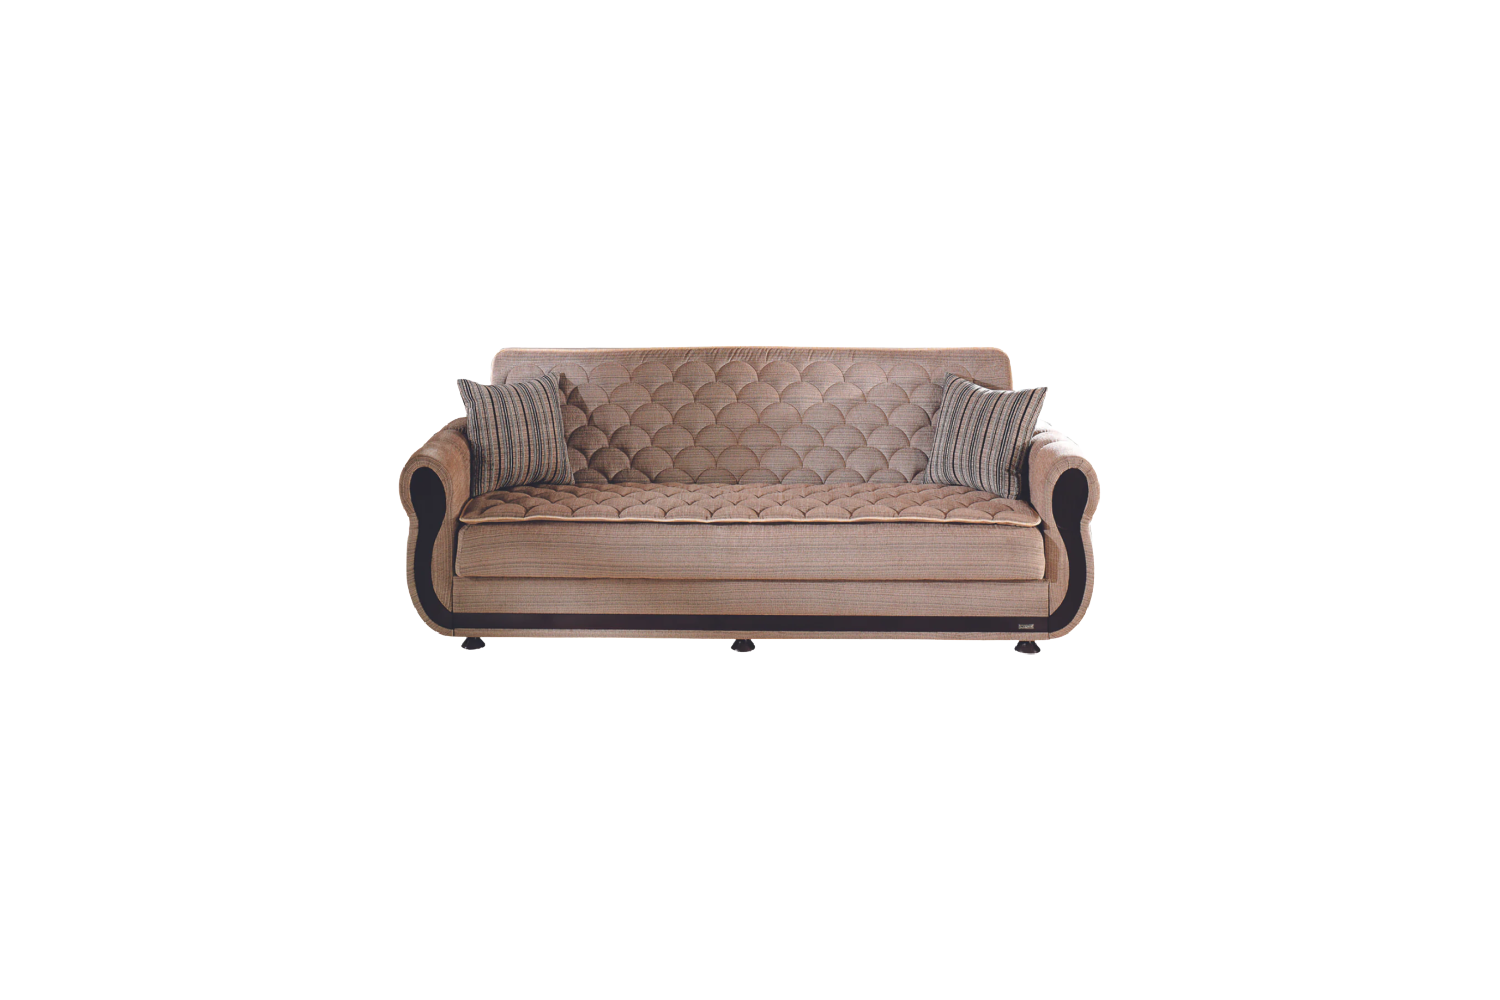 Argos 3 Seat Sleeper - Home Store Furniture